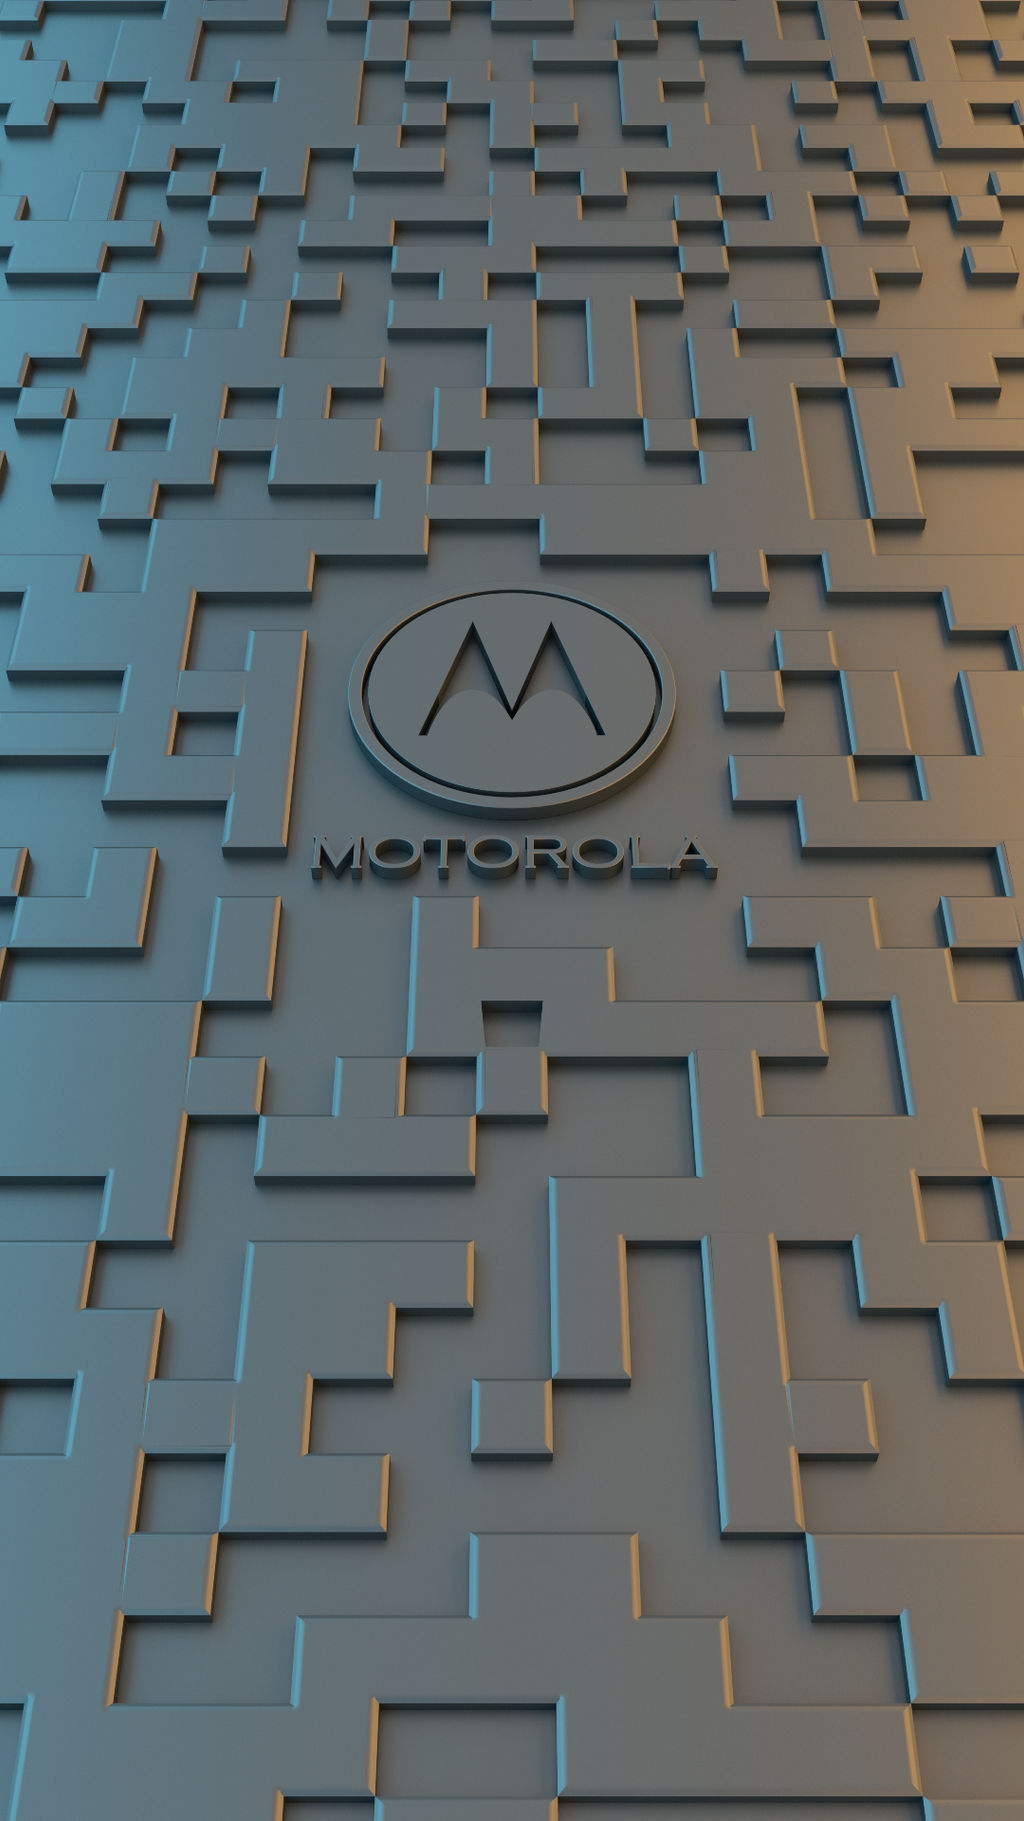 Motorola Wallpaper 2 By Ecropp On Deviantart